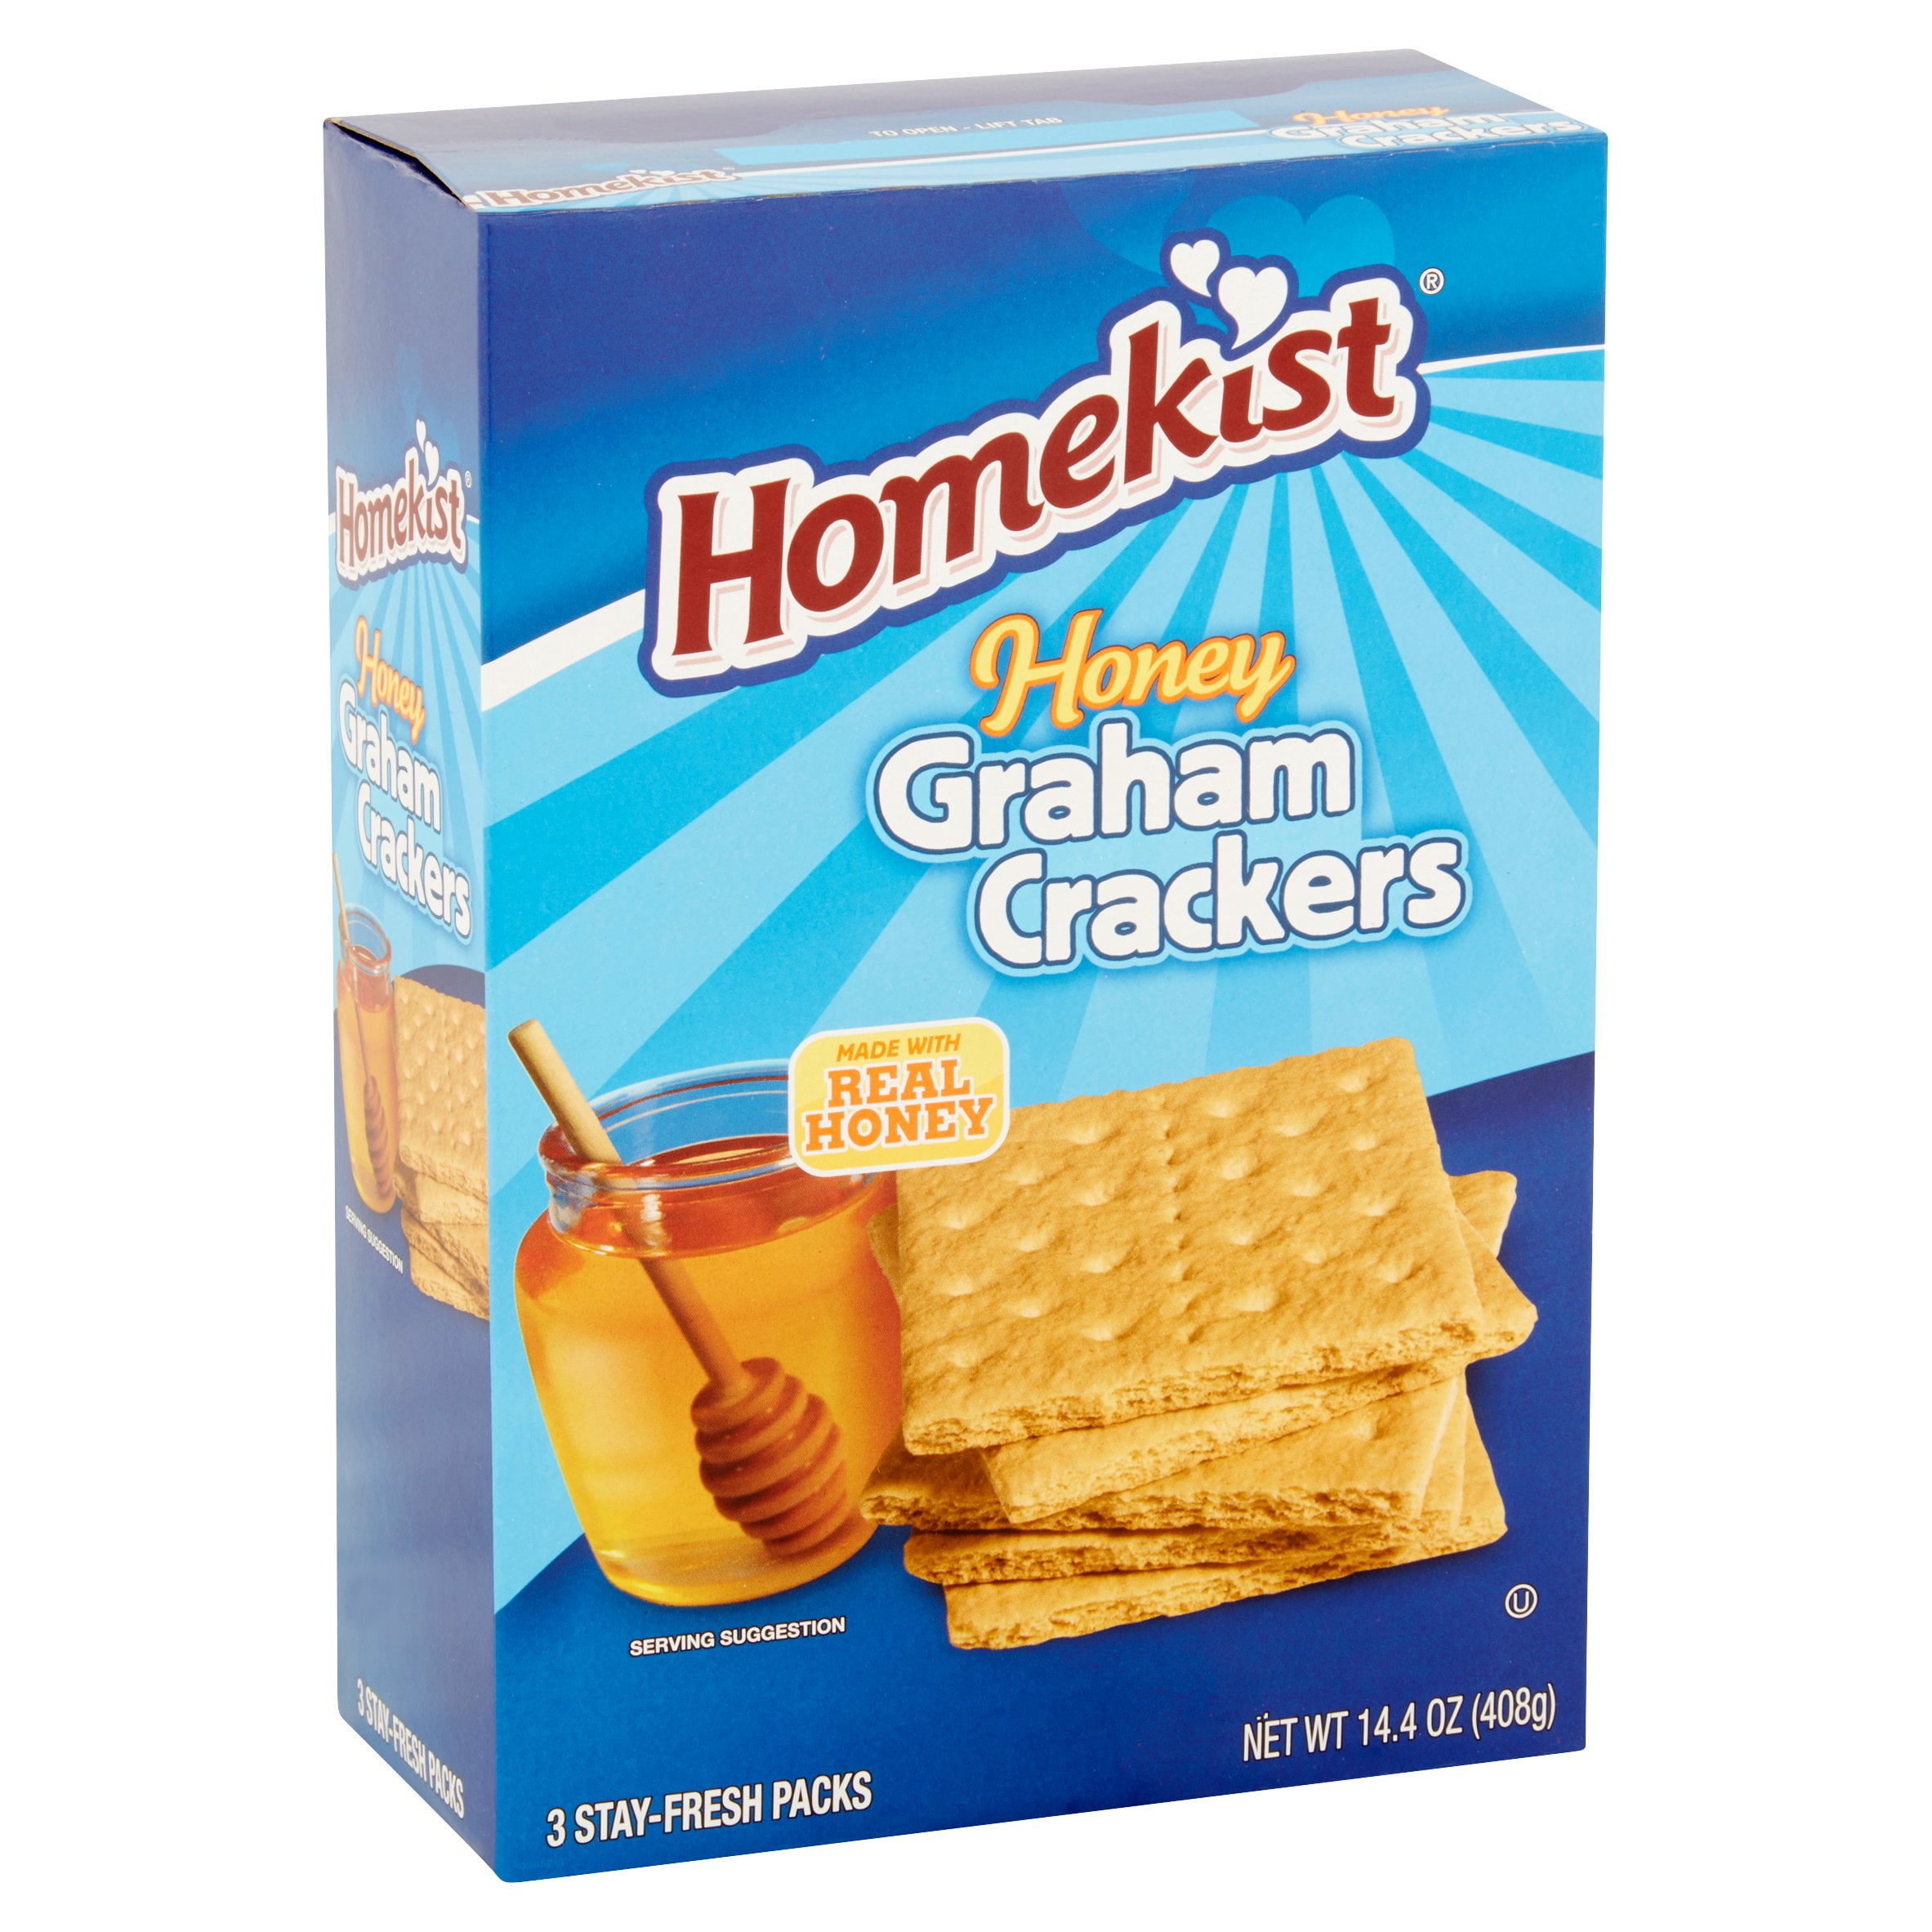 Original Cracker Boy Seasoning 7.5oz – Cracker Seasonings